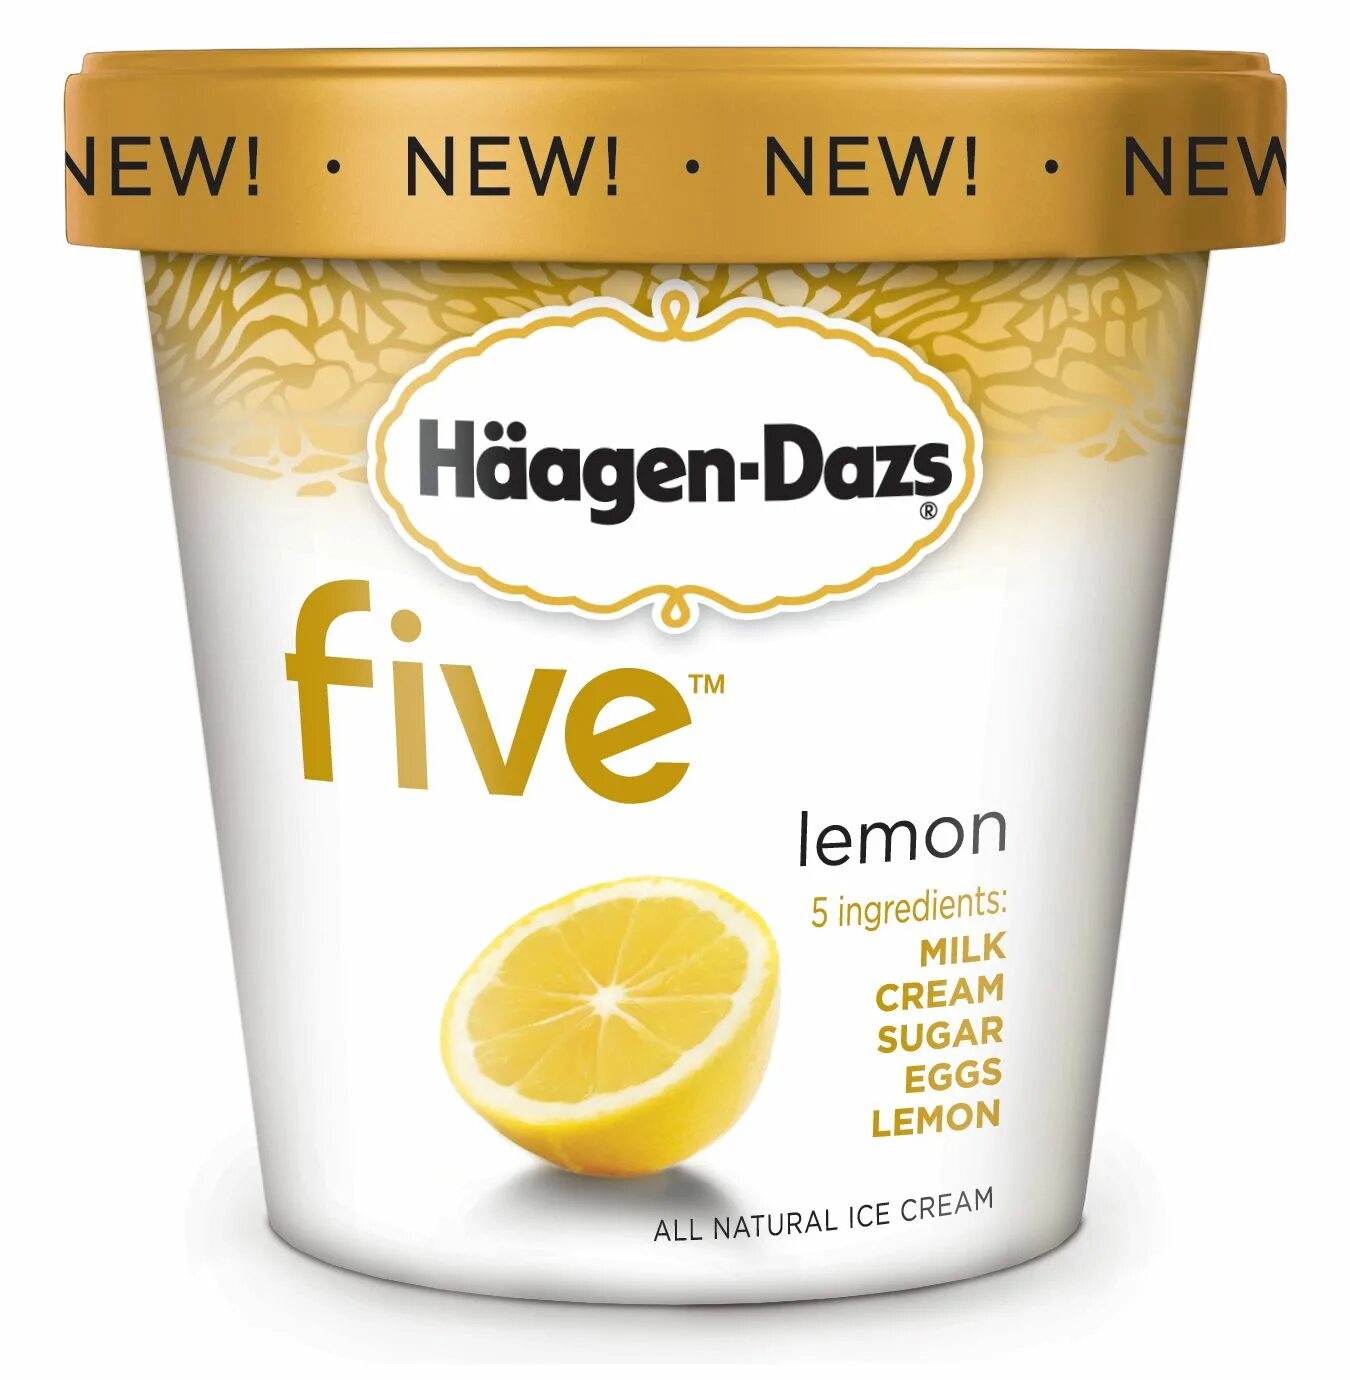 Haagen Dazs Ice Cream ingredients. Крем Sugar. Lemon Ice Cream Packaging. Sugar High крем.